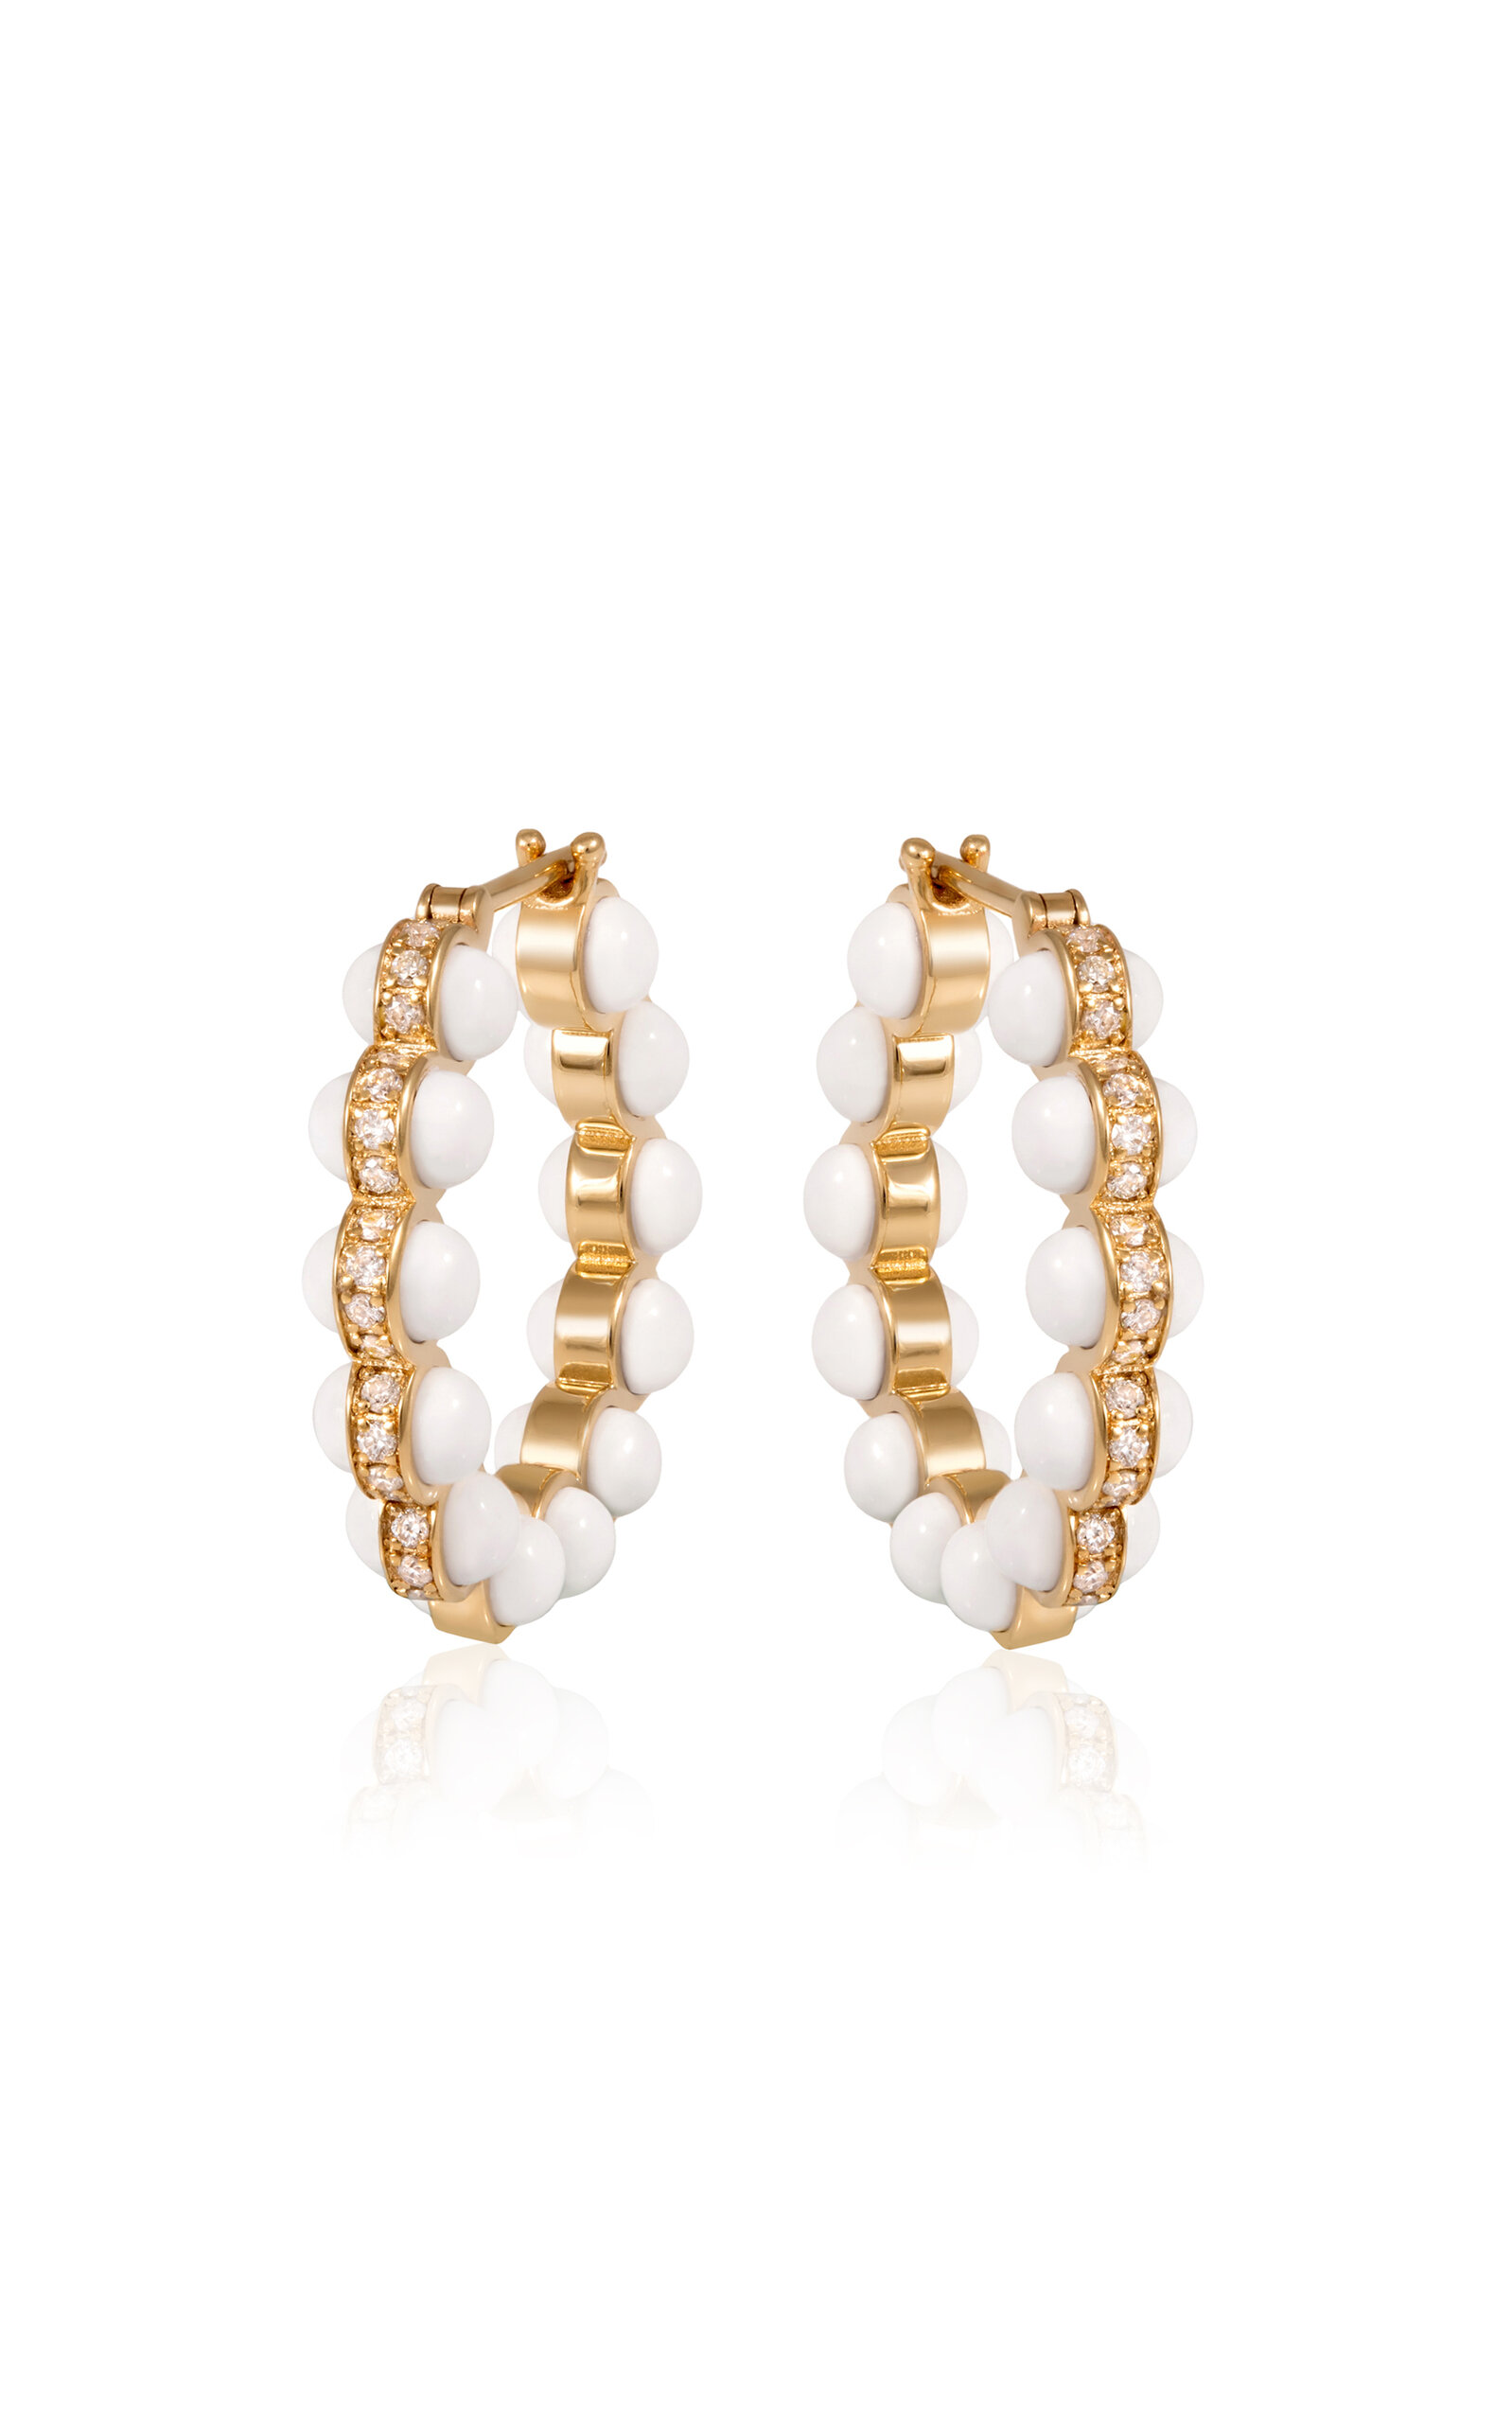 L'atelier Nawbar 18k Yellow Gold The Atom Diamond And White Enamel Earrings